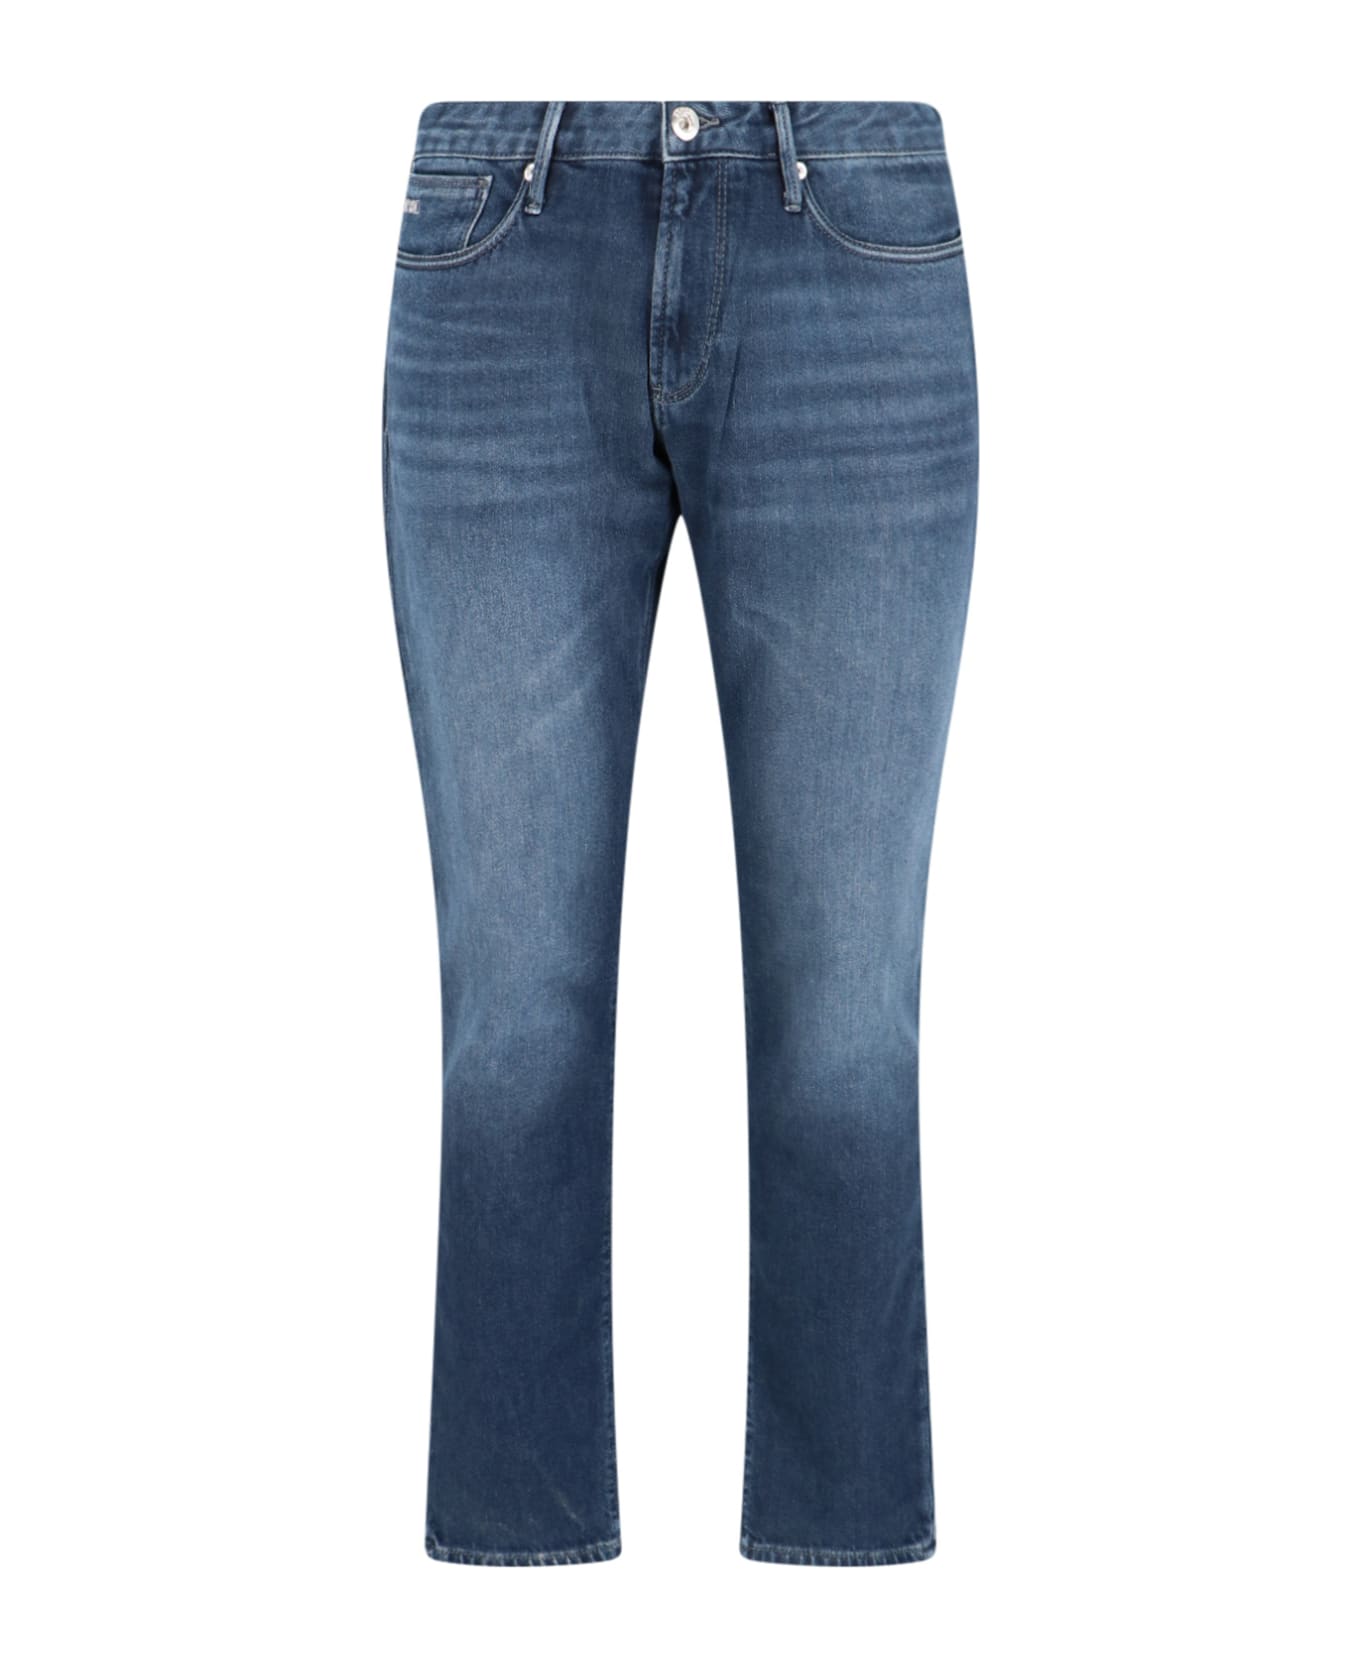 Emporio Armani Slim Jeans - Blue